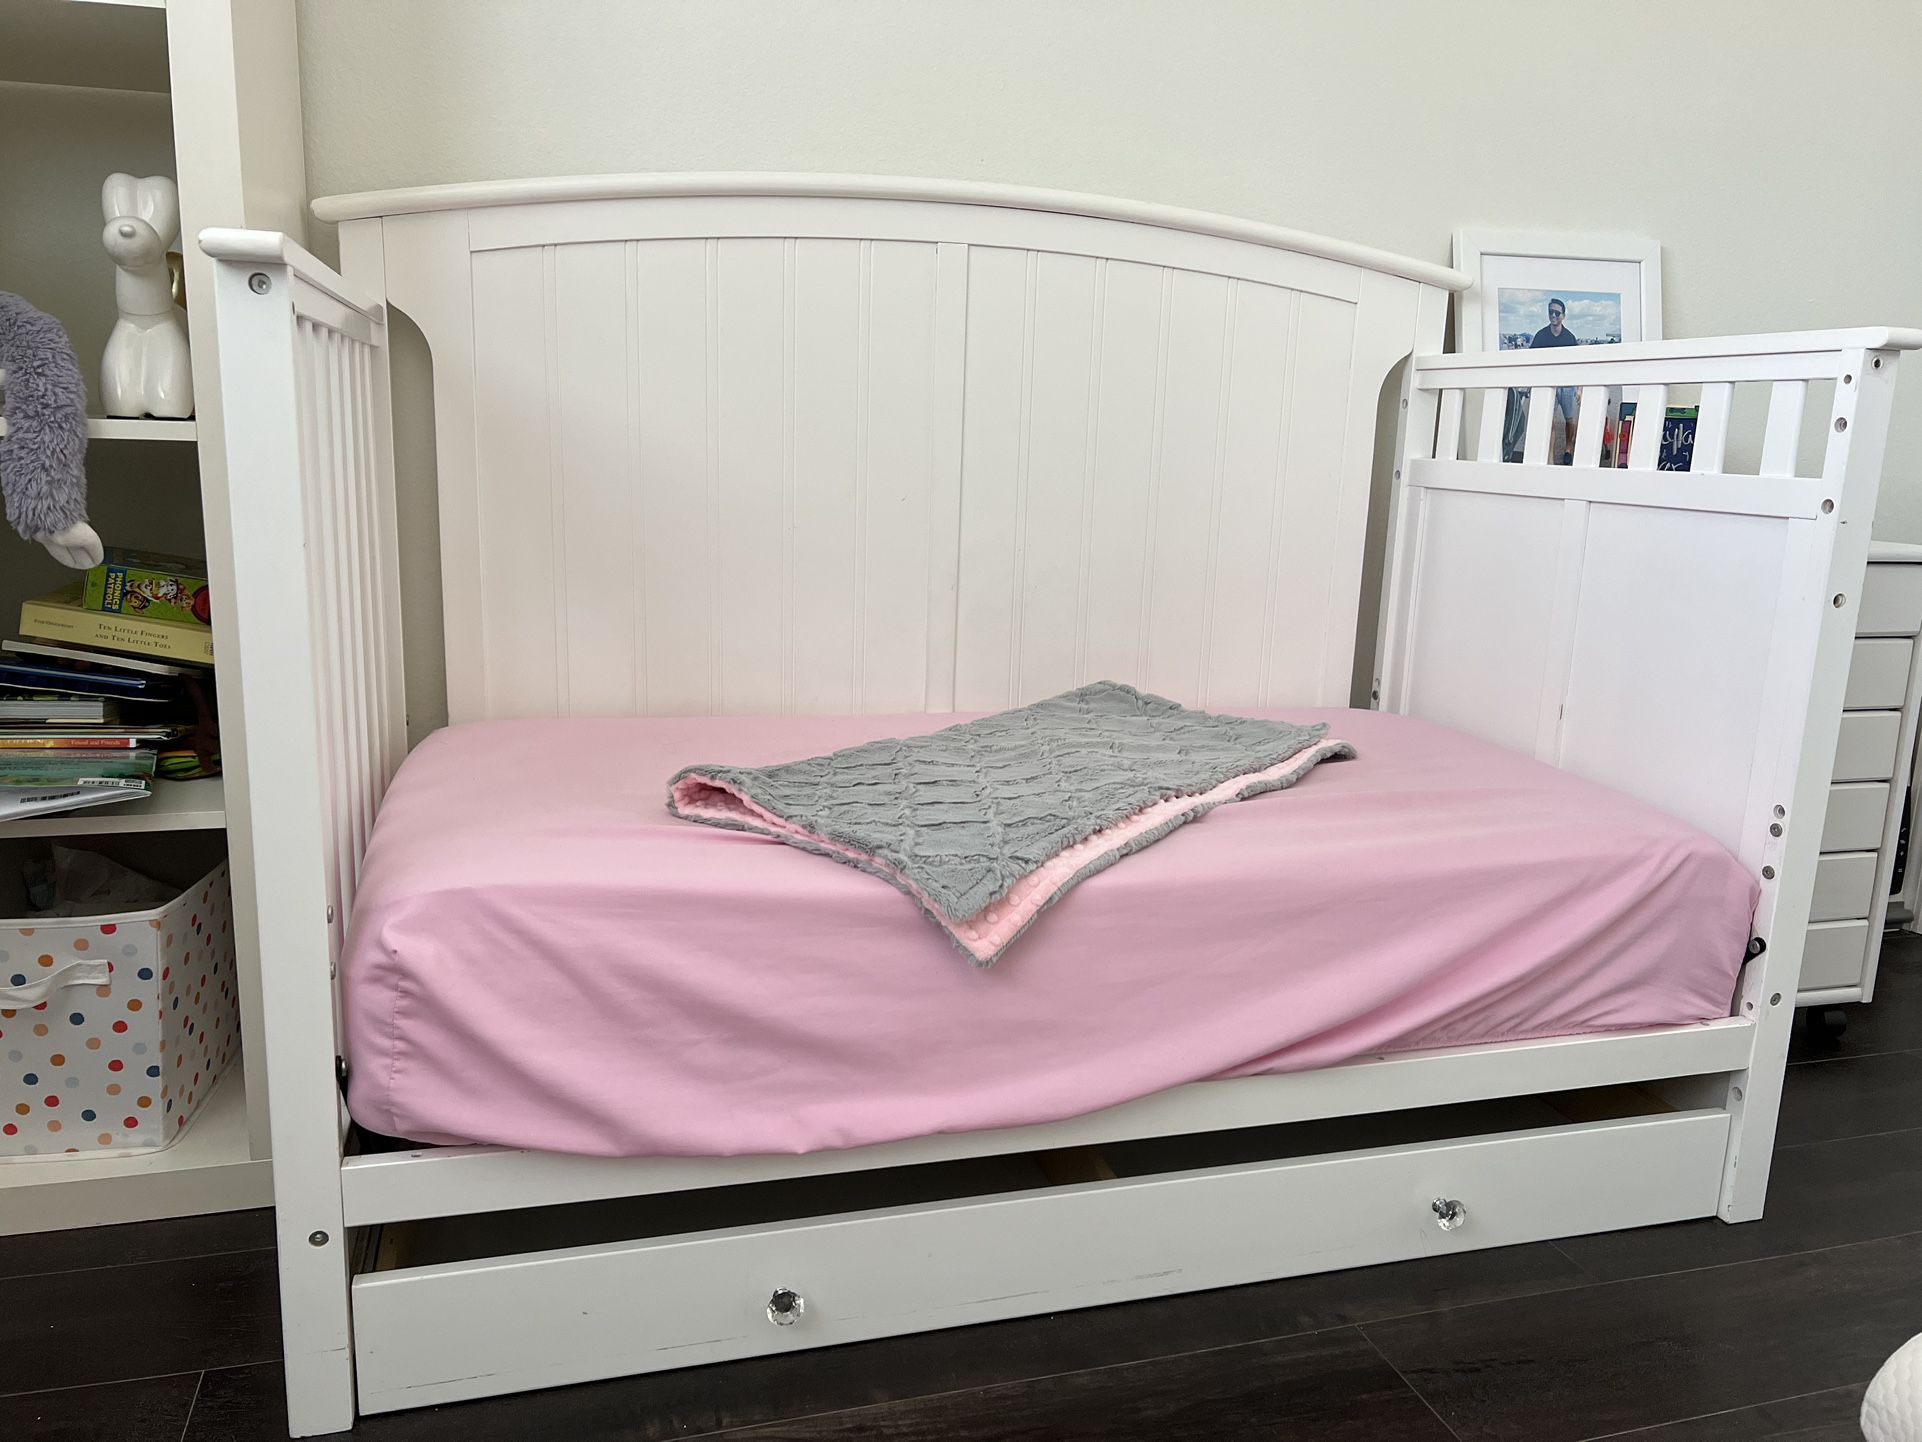 White Convertible Baby Crib with Nightstand. 